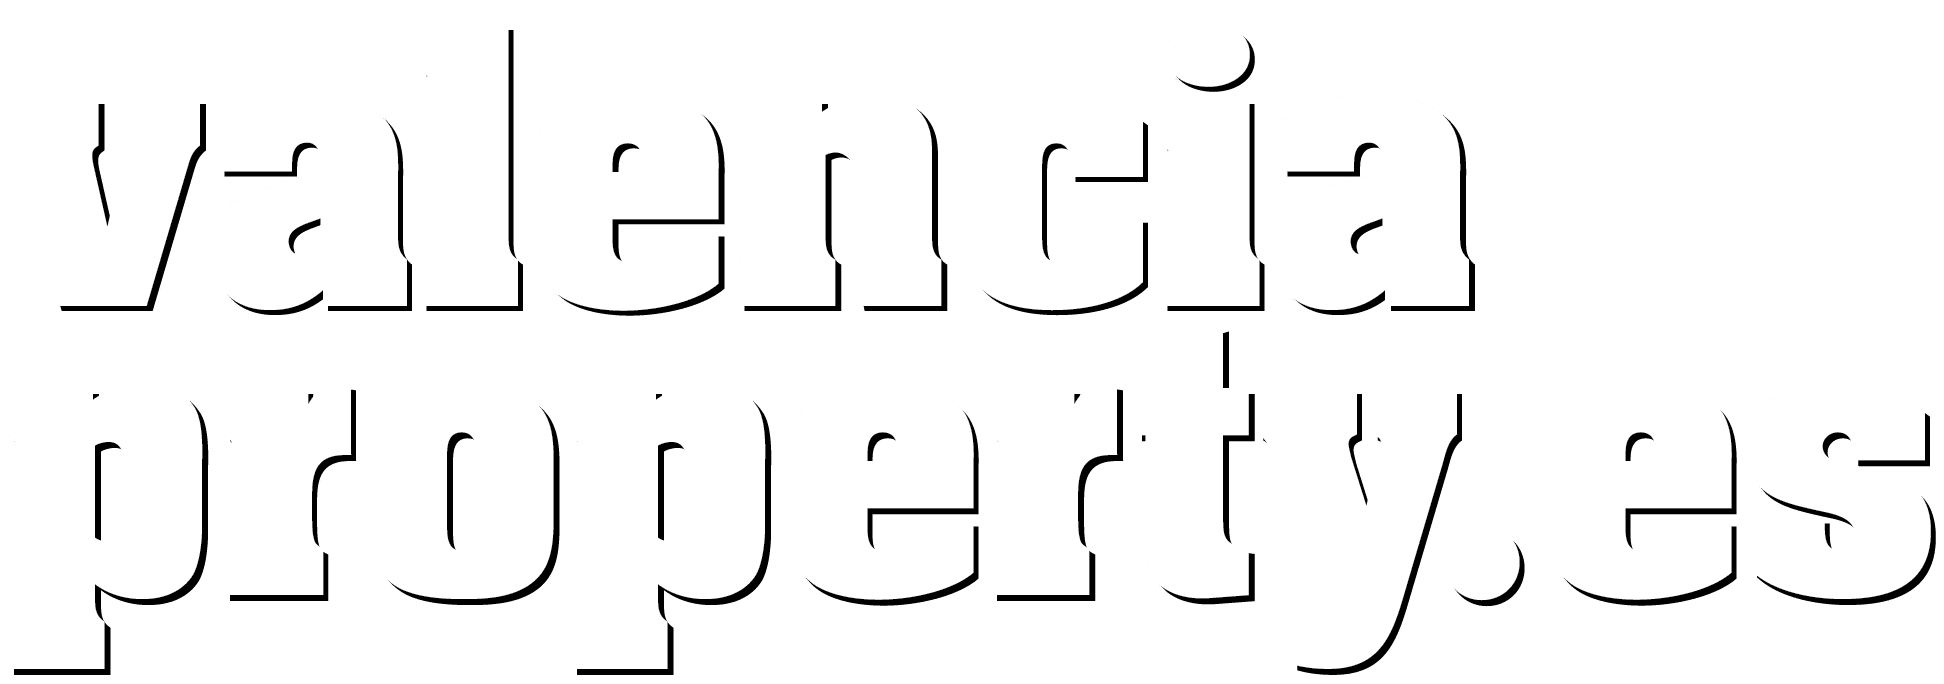 valencia property 2 lines